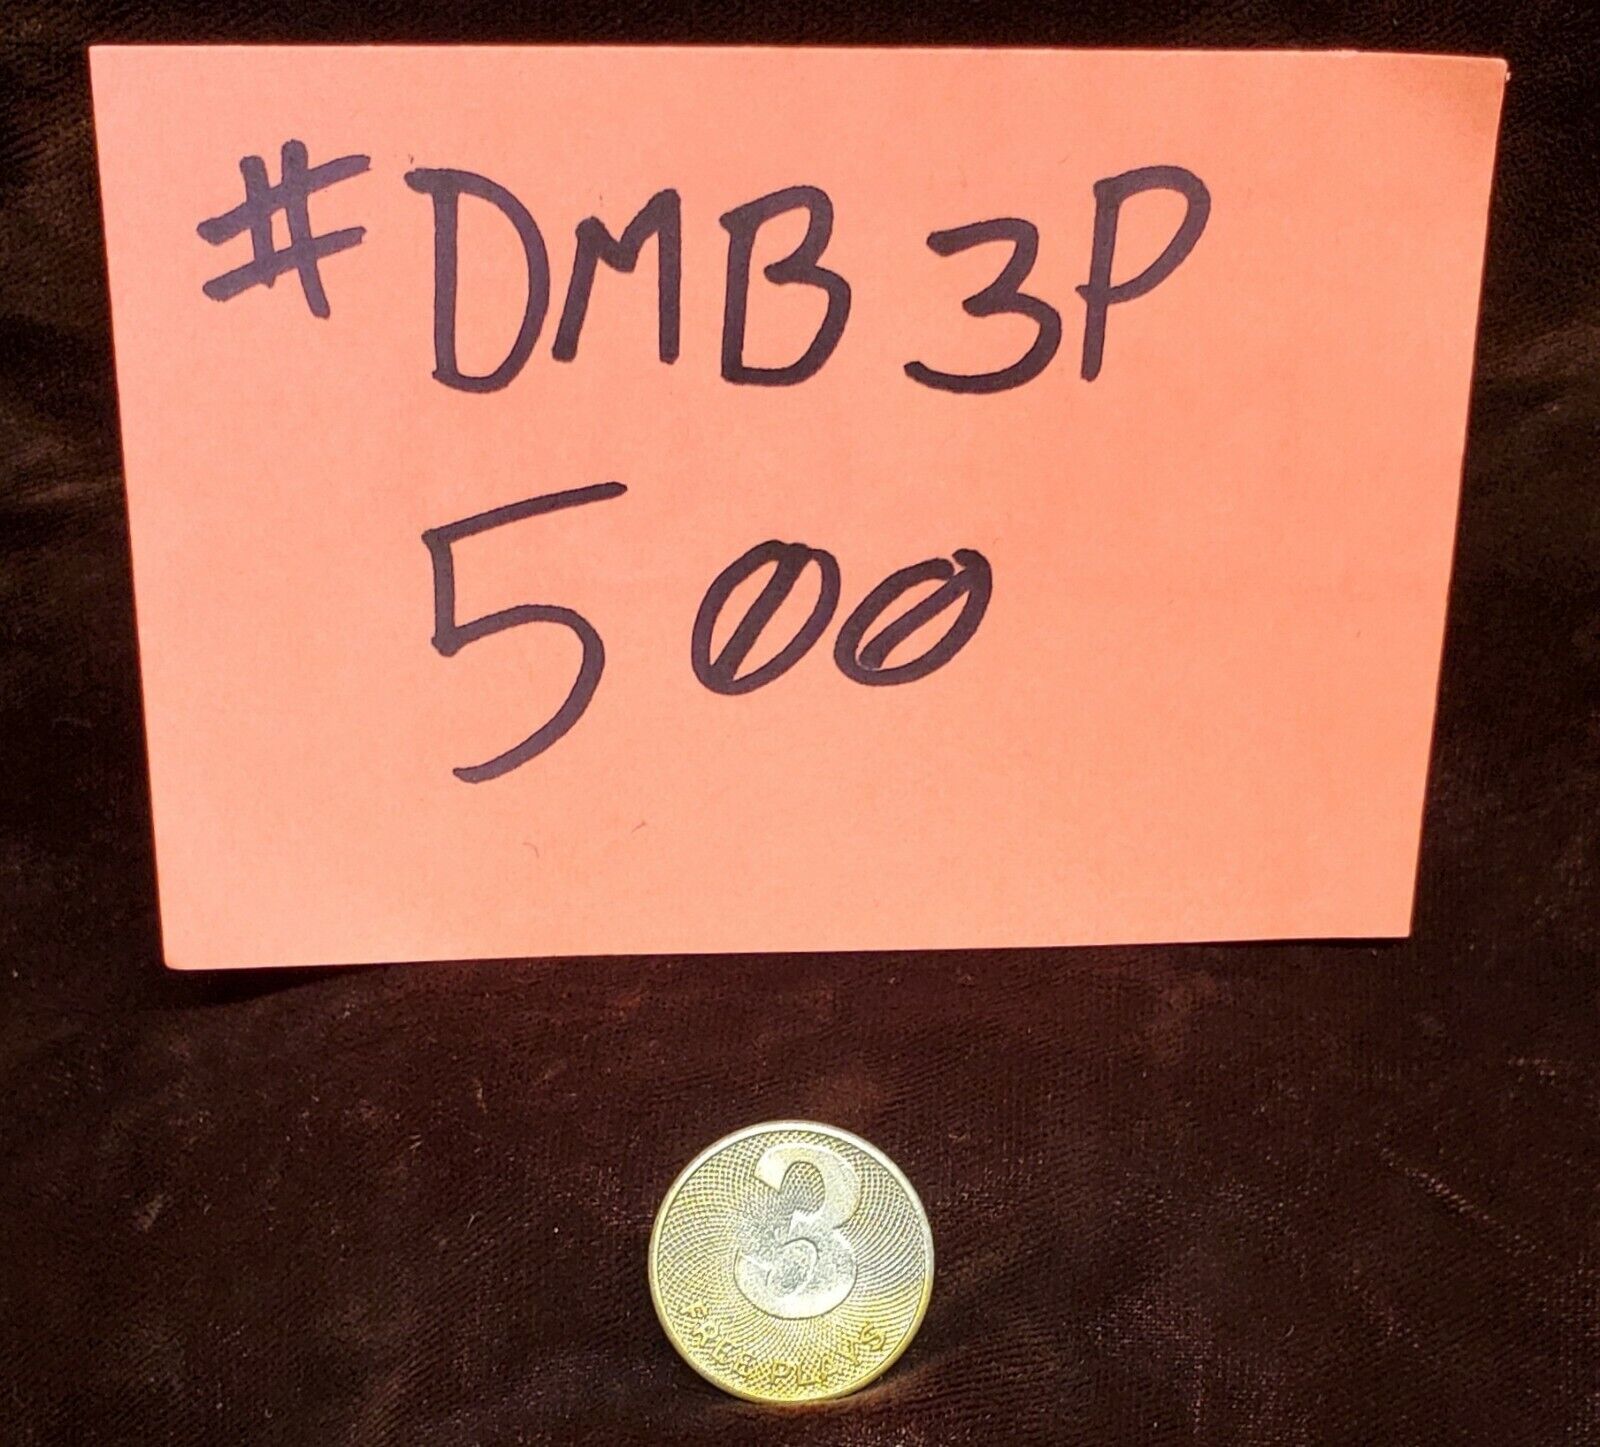 DAVAL MERCURY TOKEN ANTIQUE TRADE STIMULATOR / SLOT MACHINE #DMB3P-500